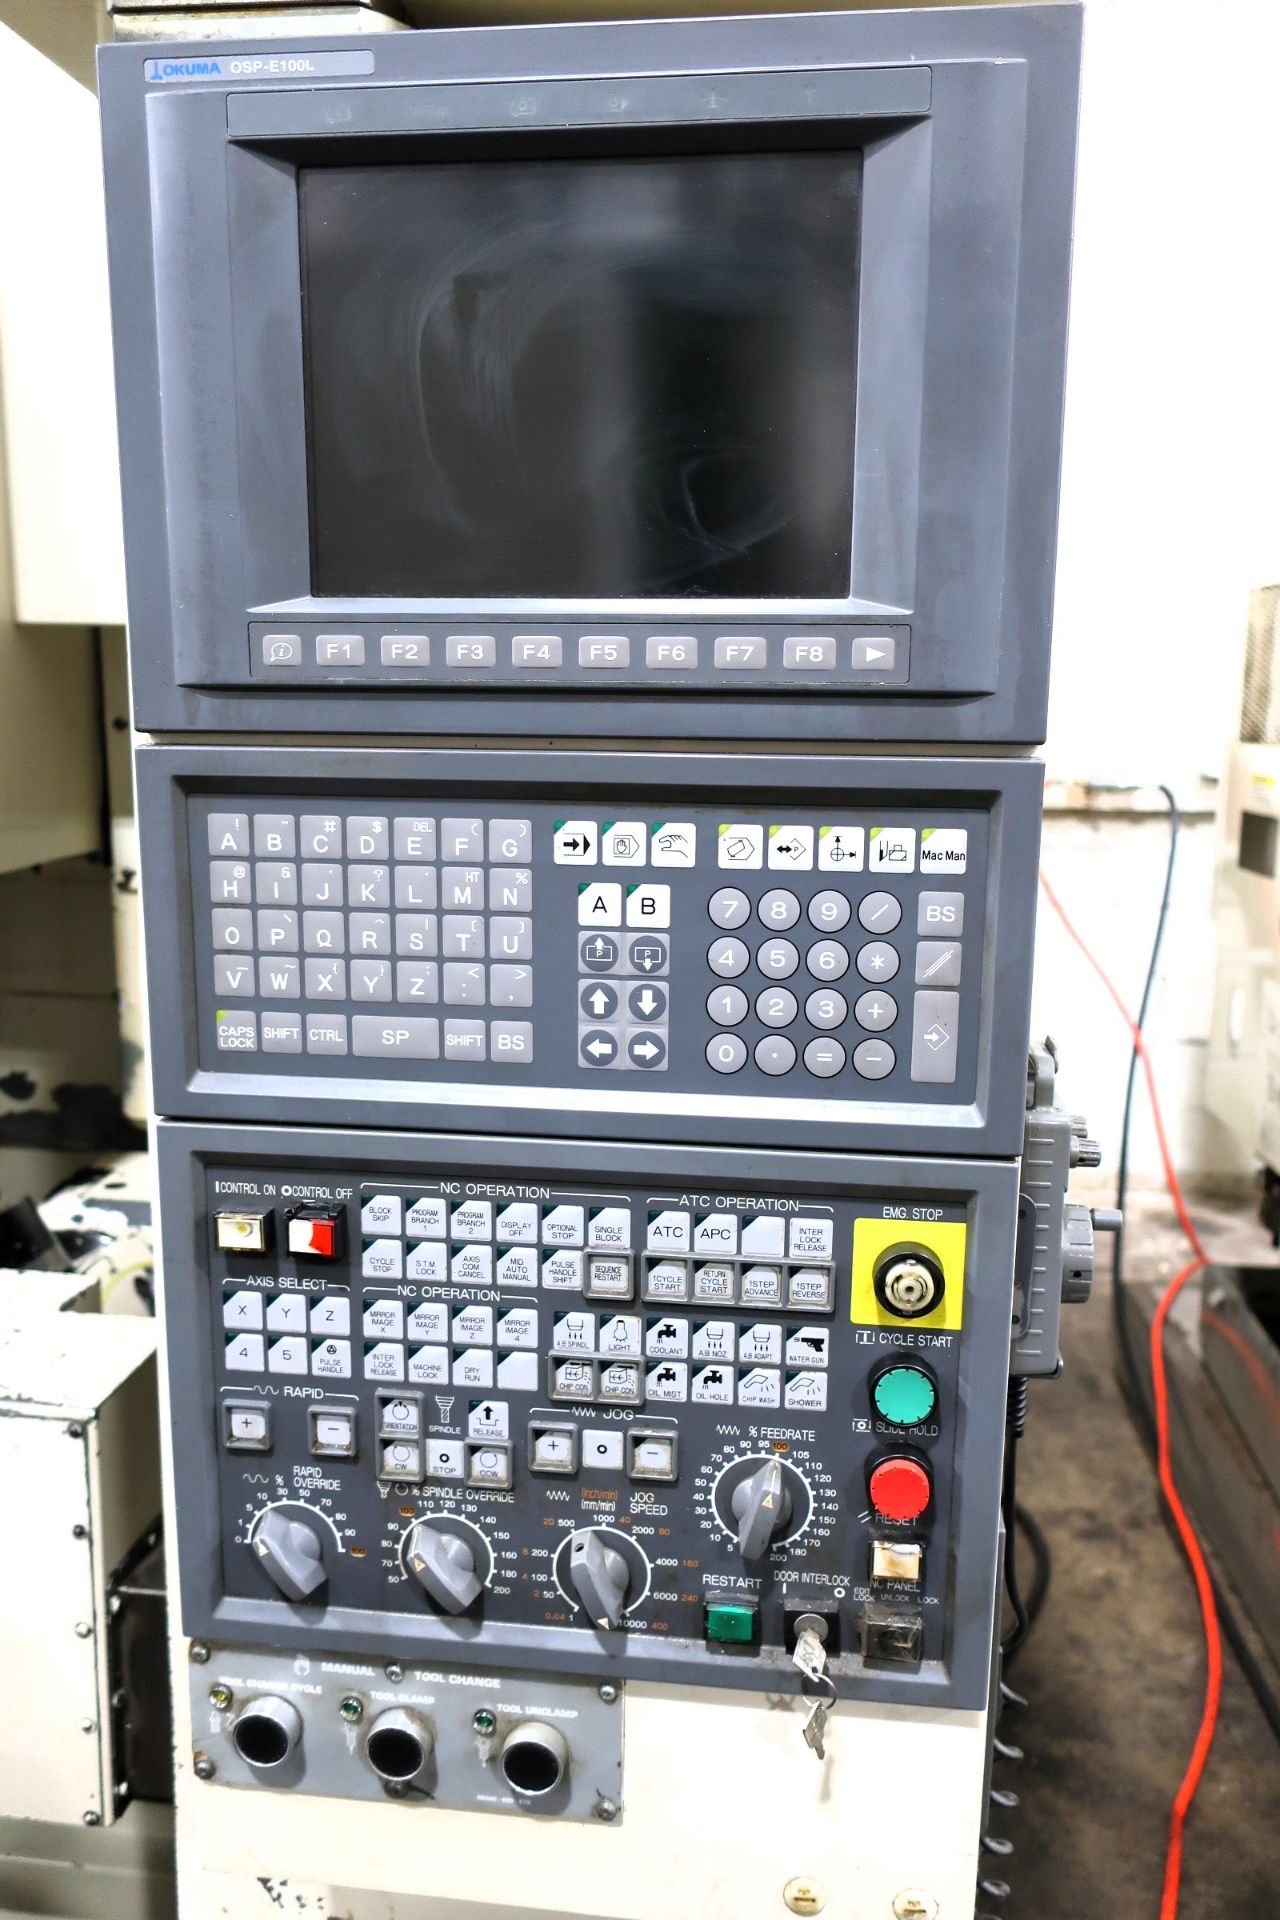 Okuma MC-V3016 5-Axis CNC Vertical Machining Center, S/N 0038, New 2003 - Image 2 of 19